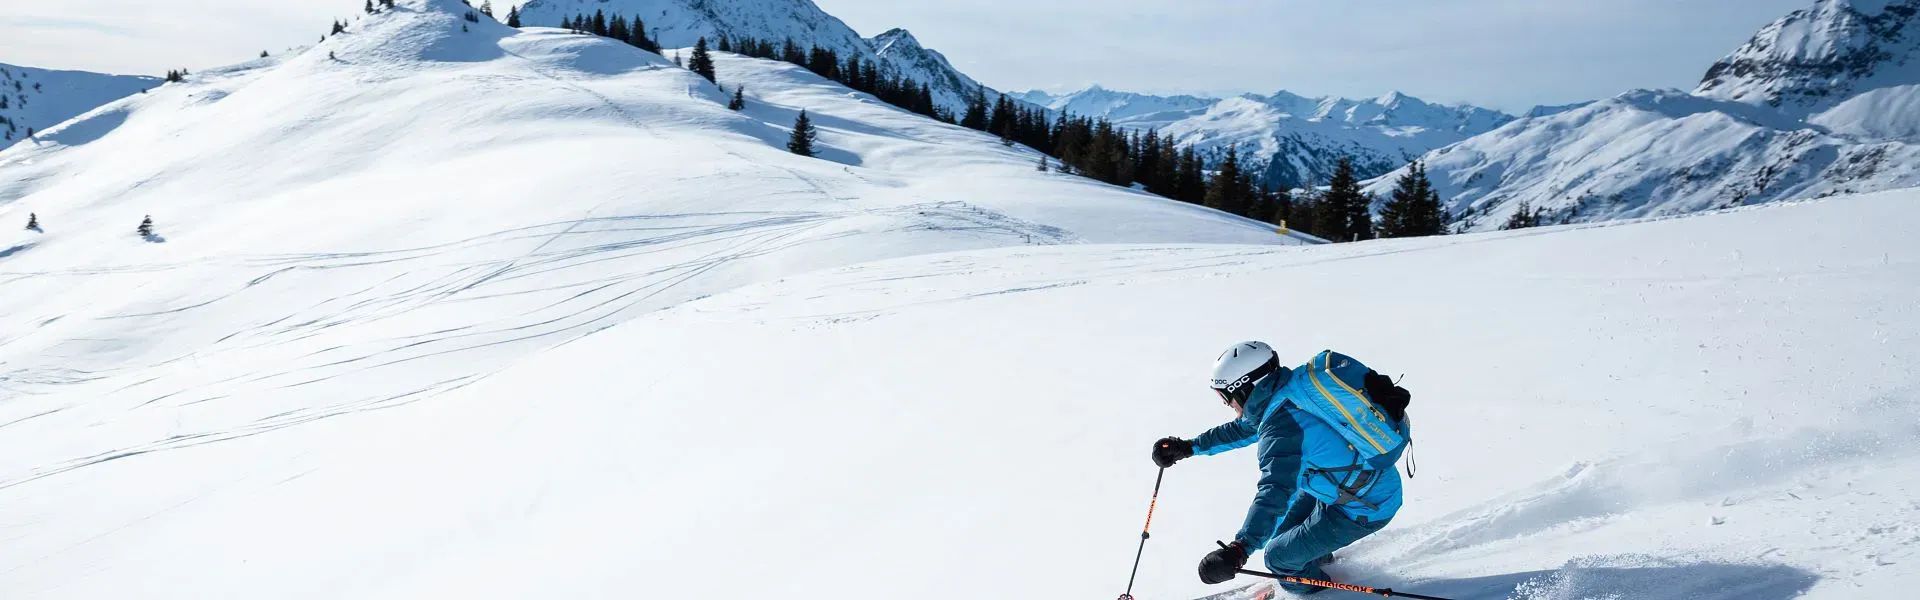 Kitzbueheler Alpen KAT Skitour Winter @Valentin Widmesser (15)